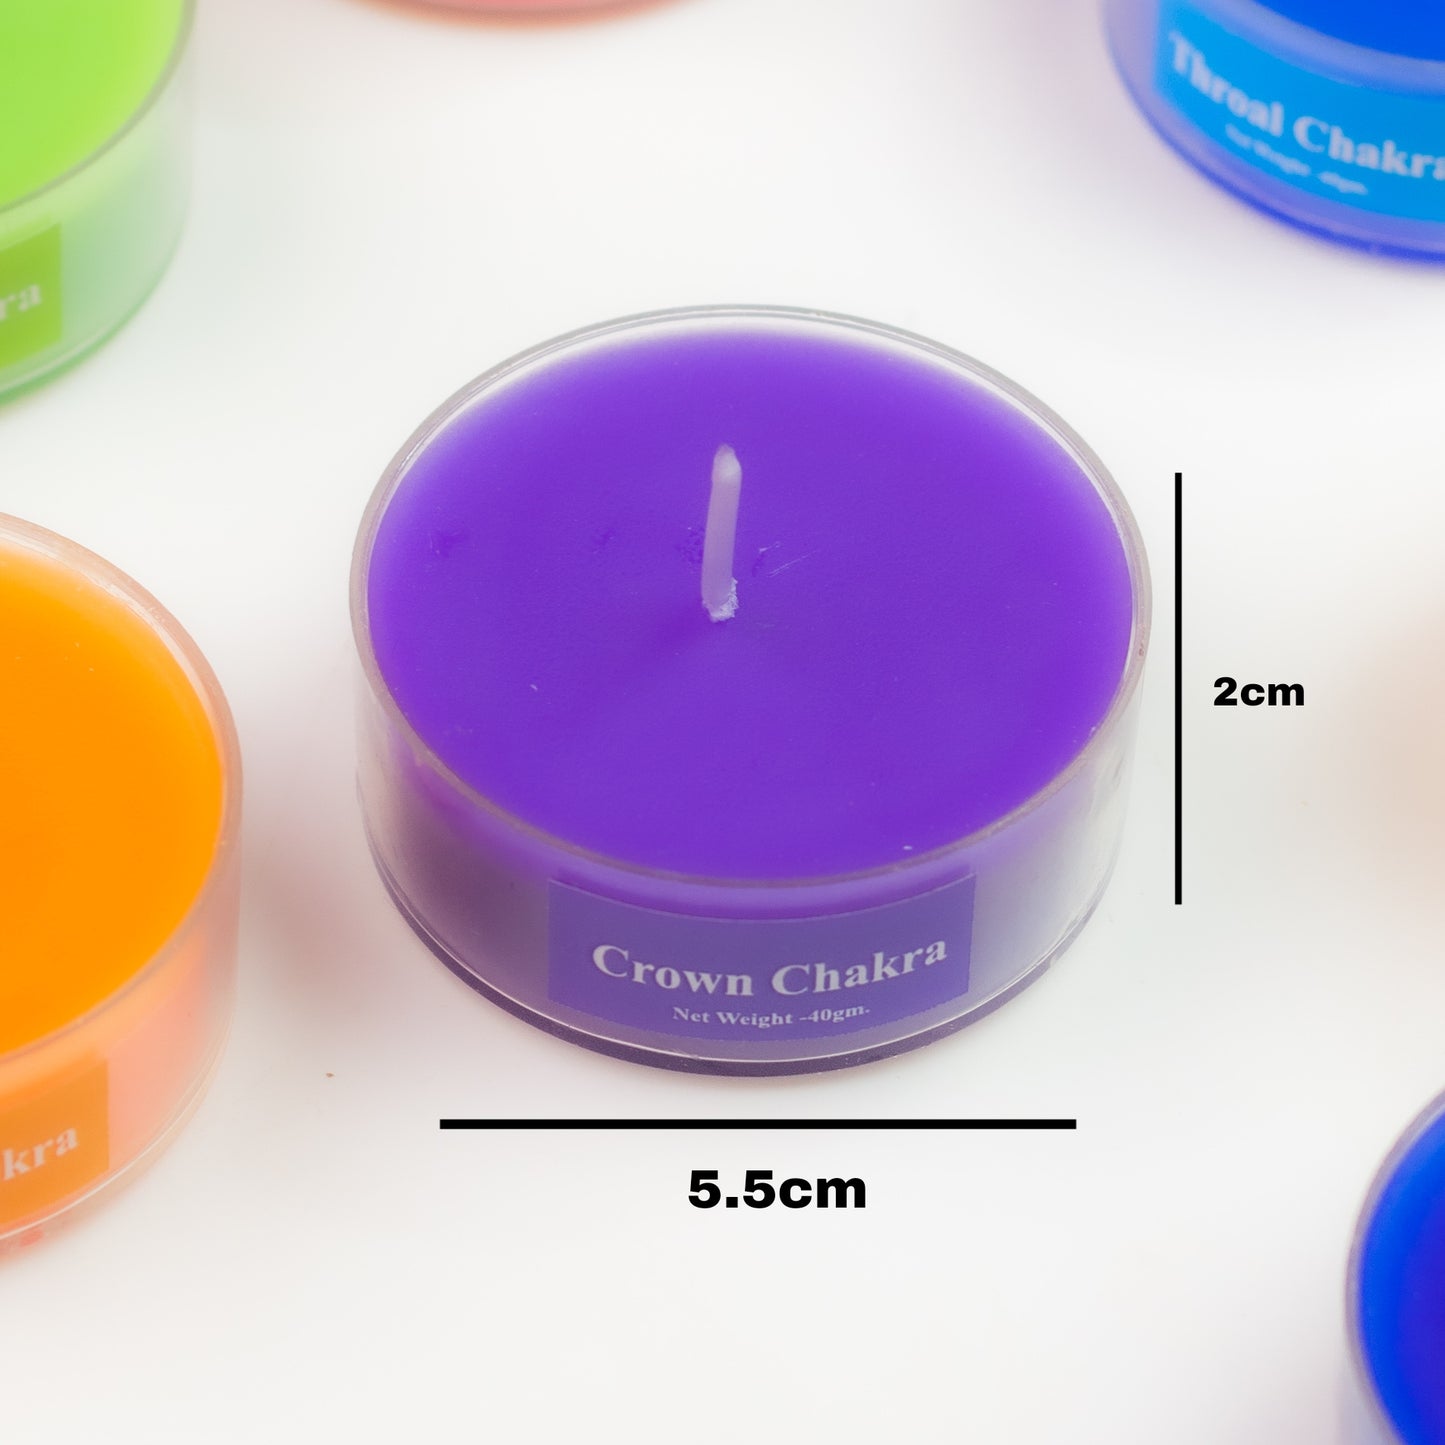 Bulk Buy AuraDecor 7 Chakras Tealight Candles ( Burning Time 9 hr ) ( 20 Packs )